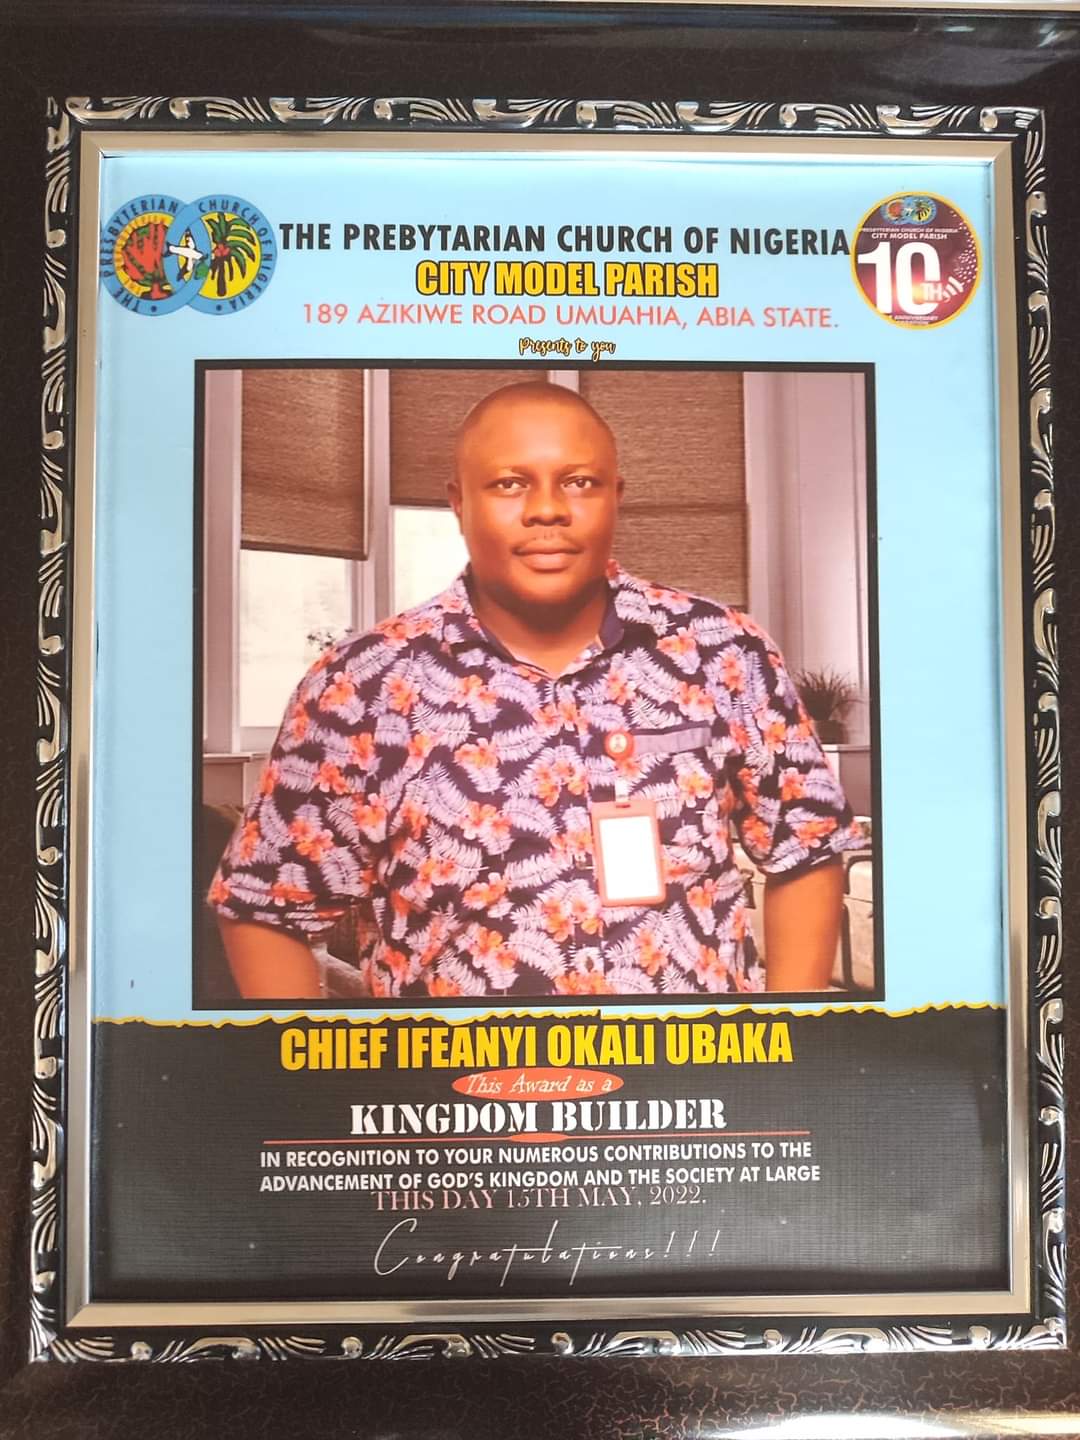 ABN TV Boss, Ifeanyi Okali Bags Kingdom Builder Award Of Presbyterian Church (Photos)